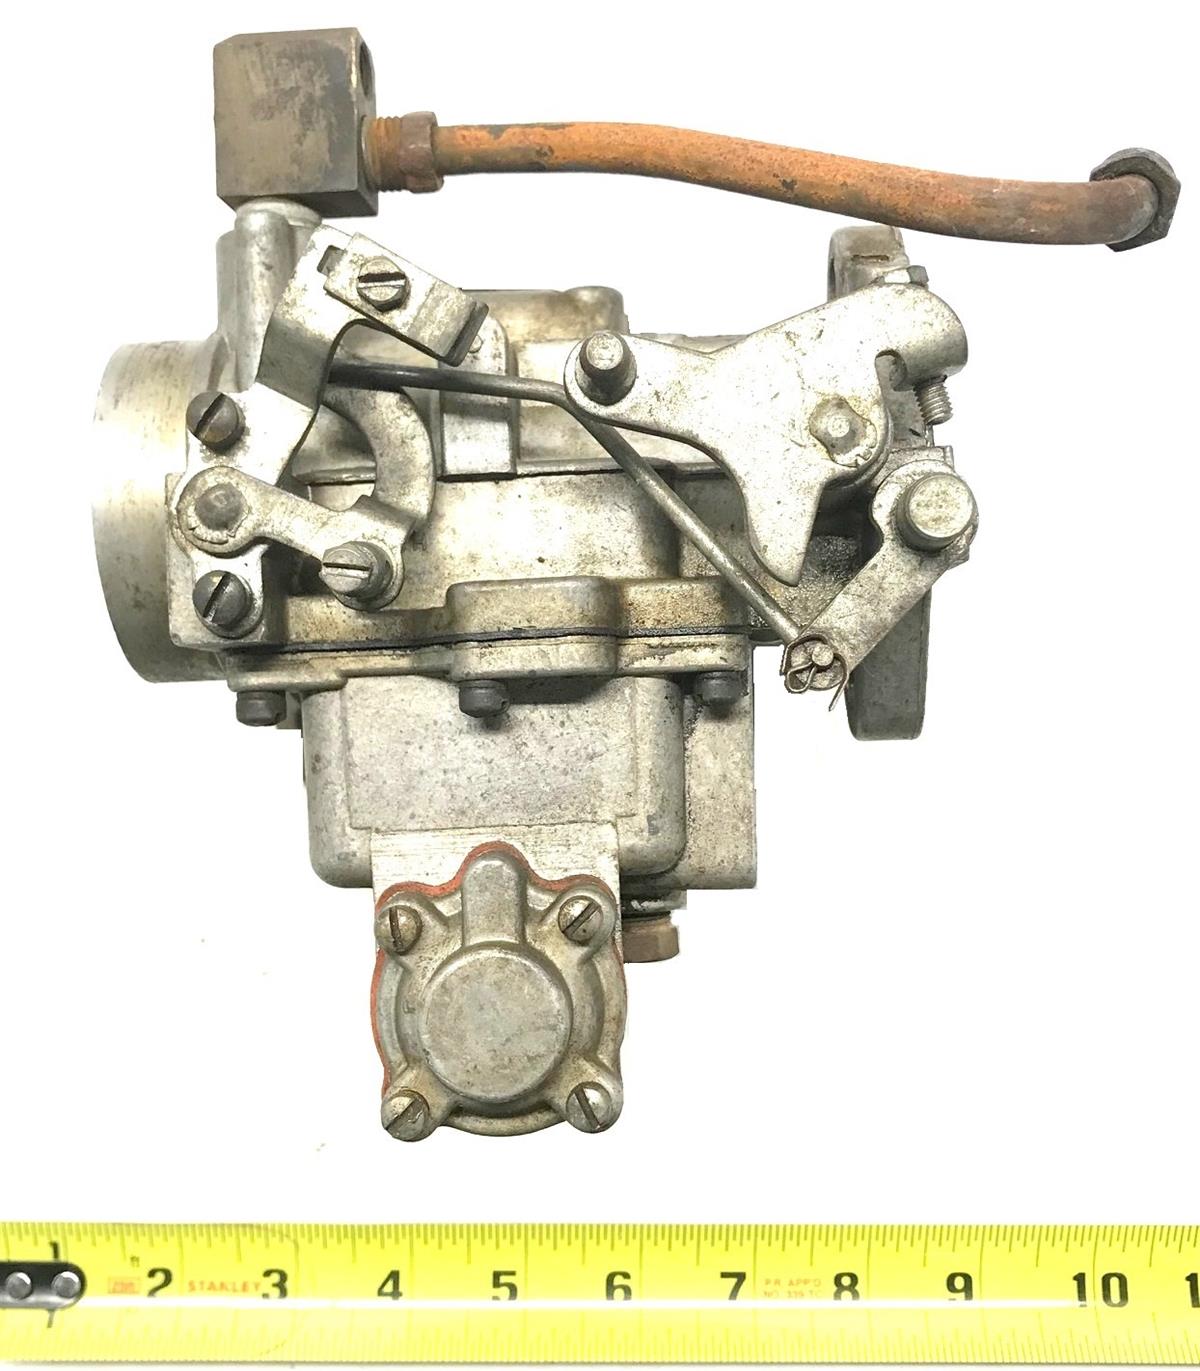 M151-147 | M151-147  M151 AM General MUTT Carburetor Assembly  (1).jpg